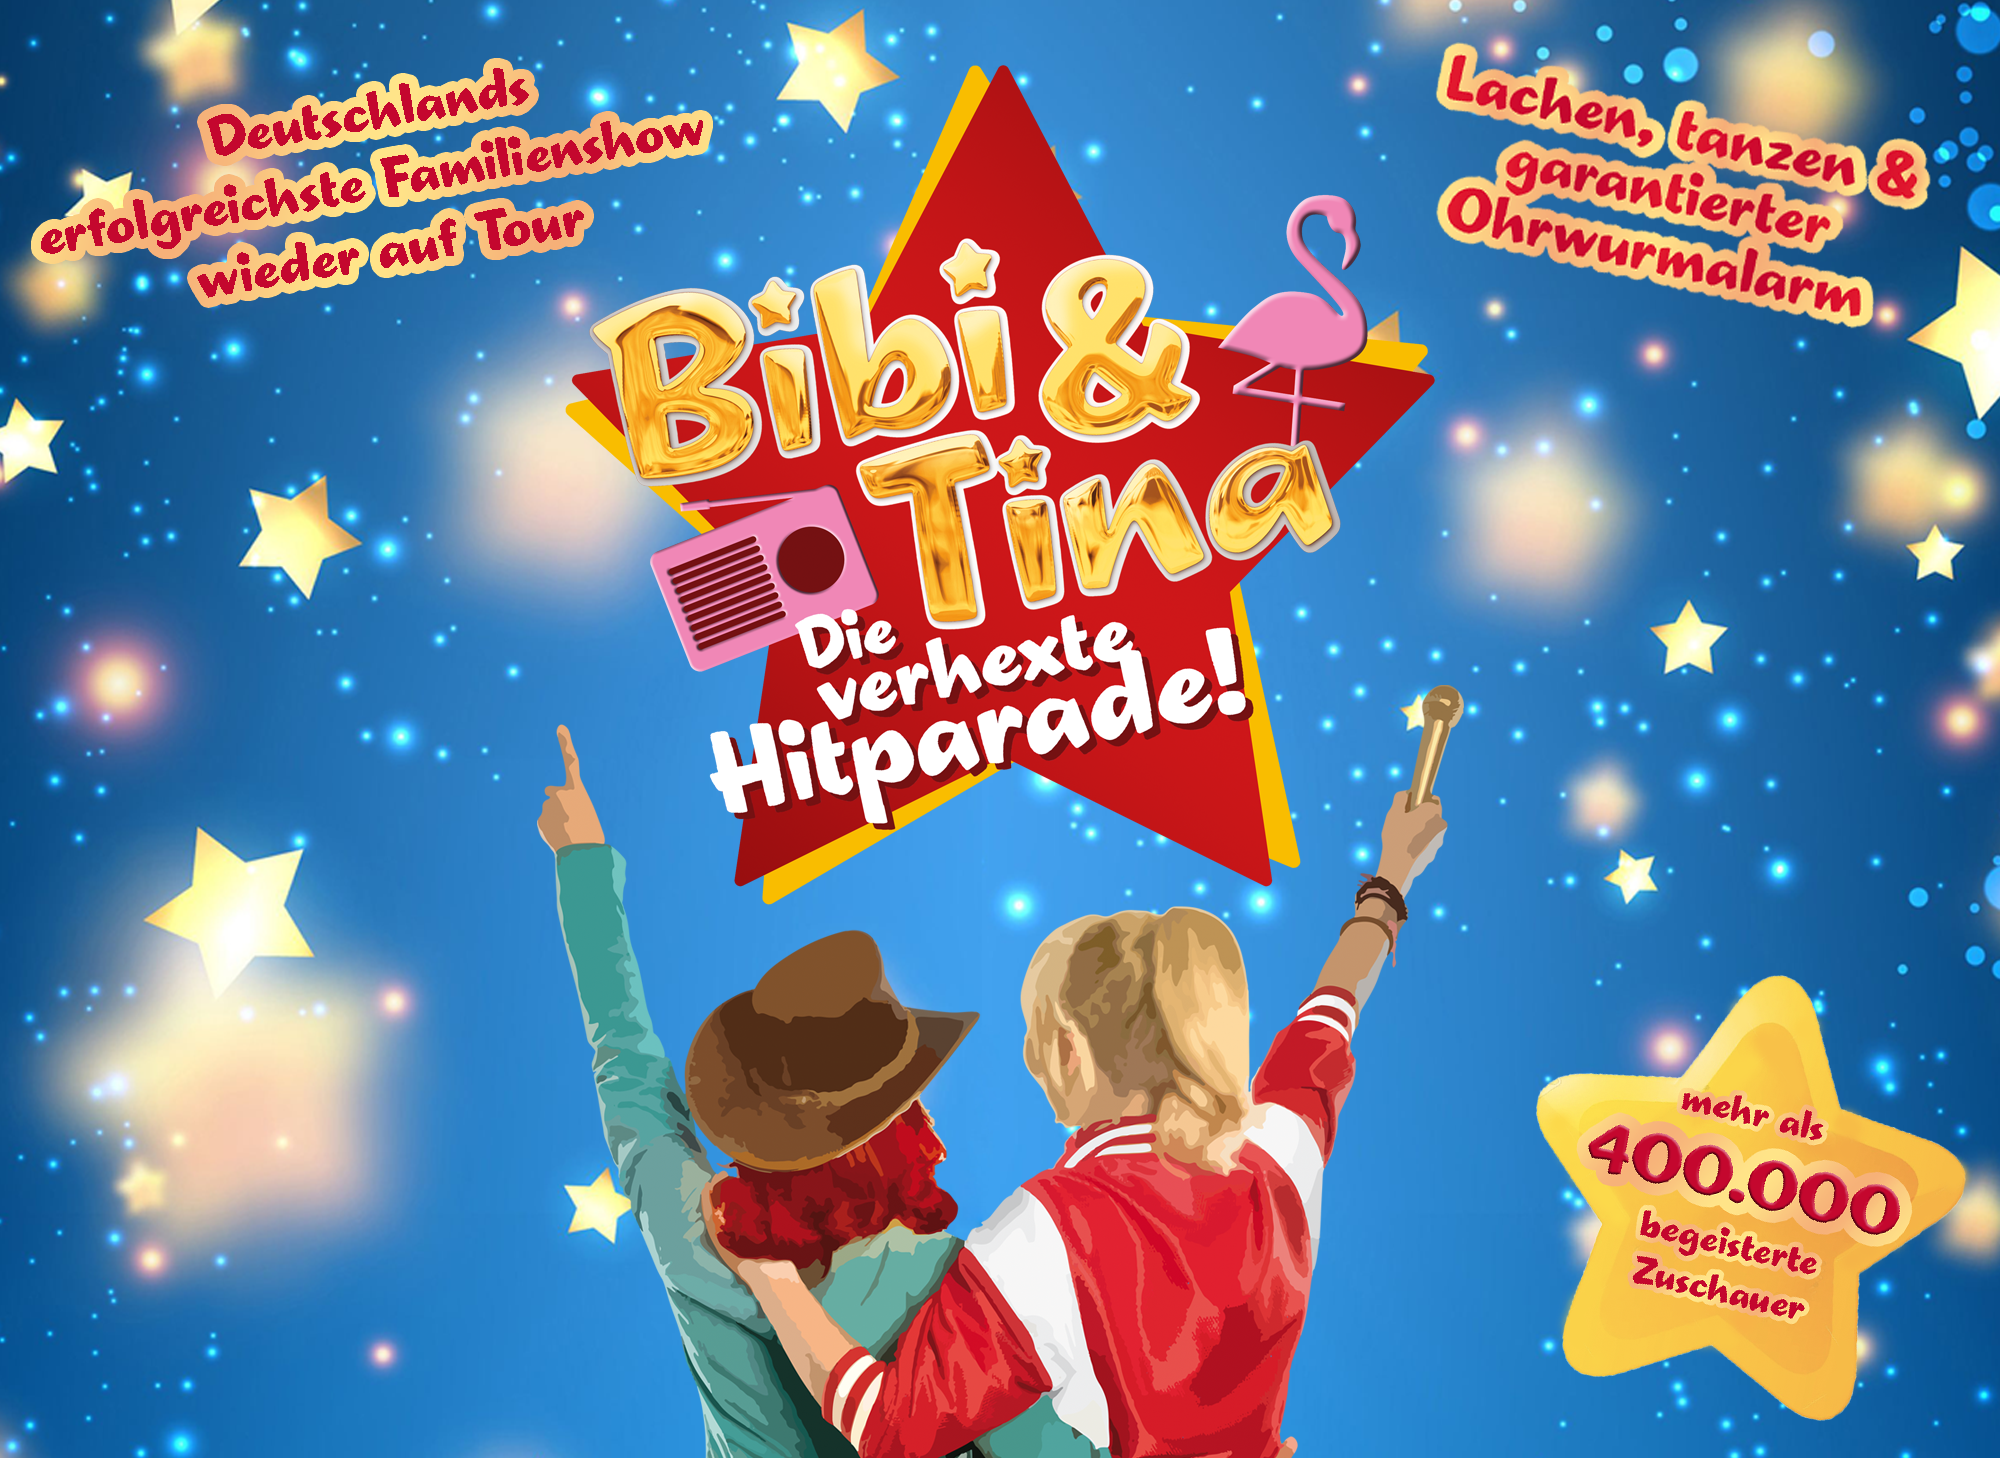 Bibi & Tina – Die verhexte Hitparade